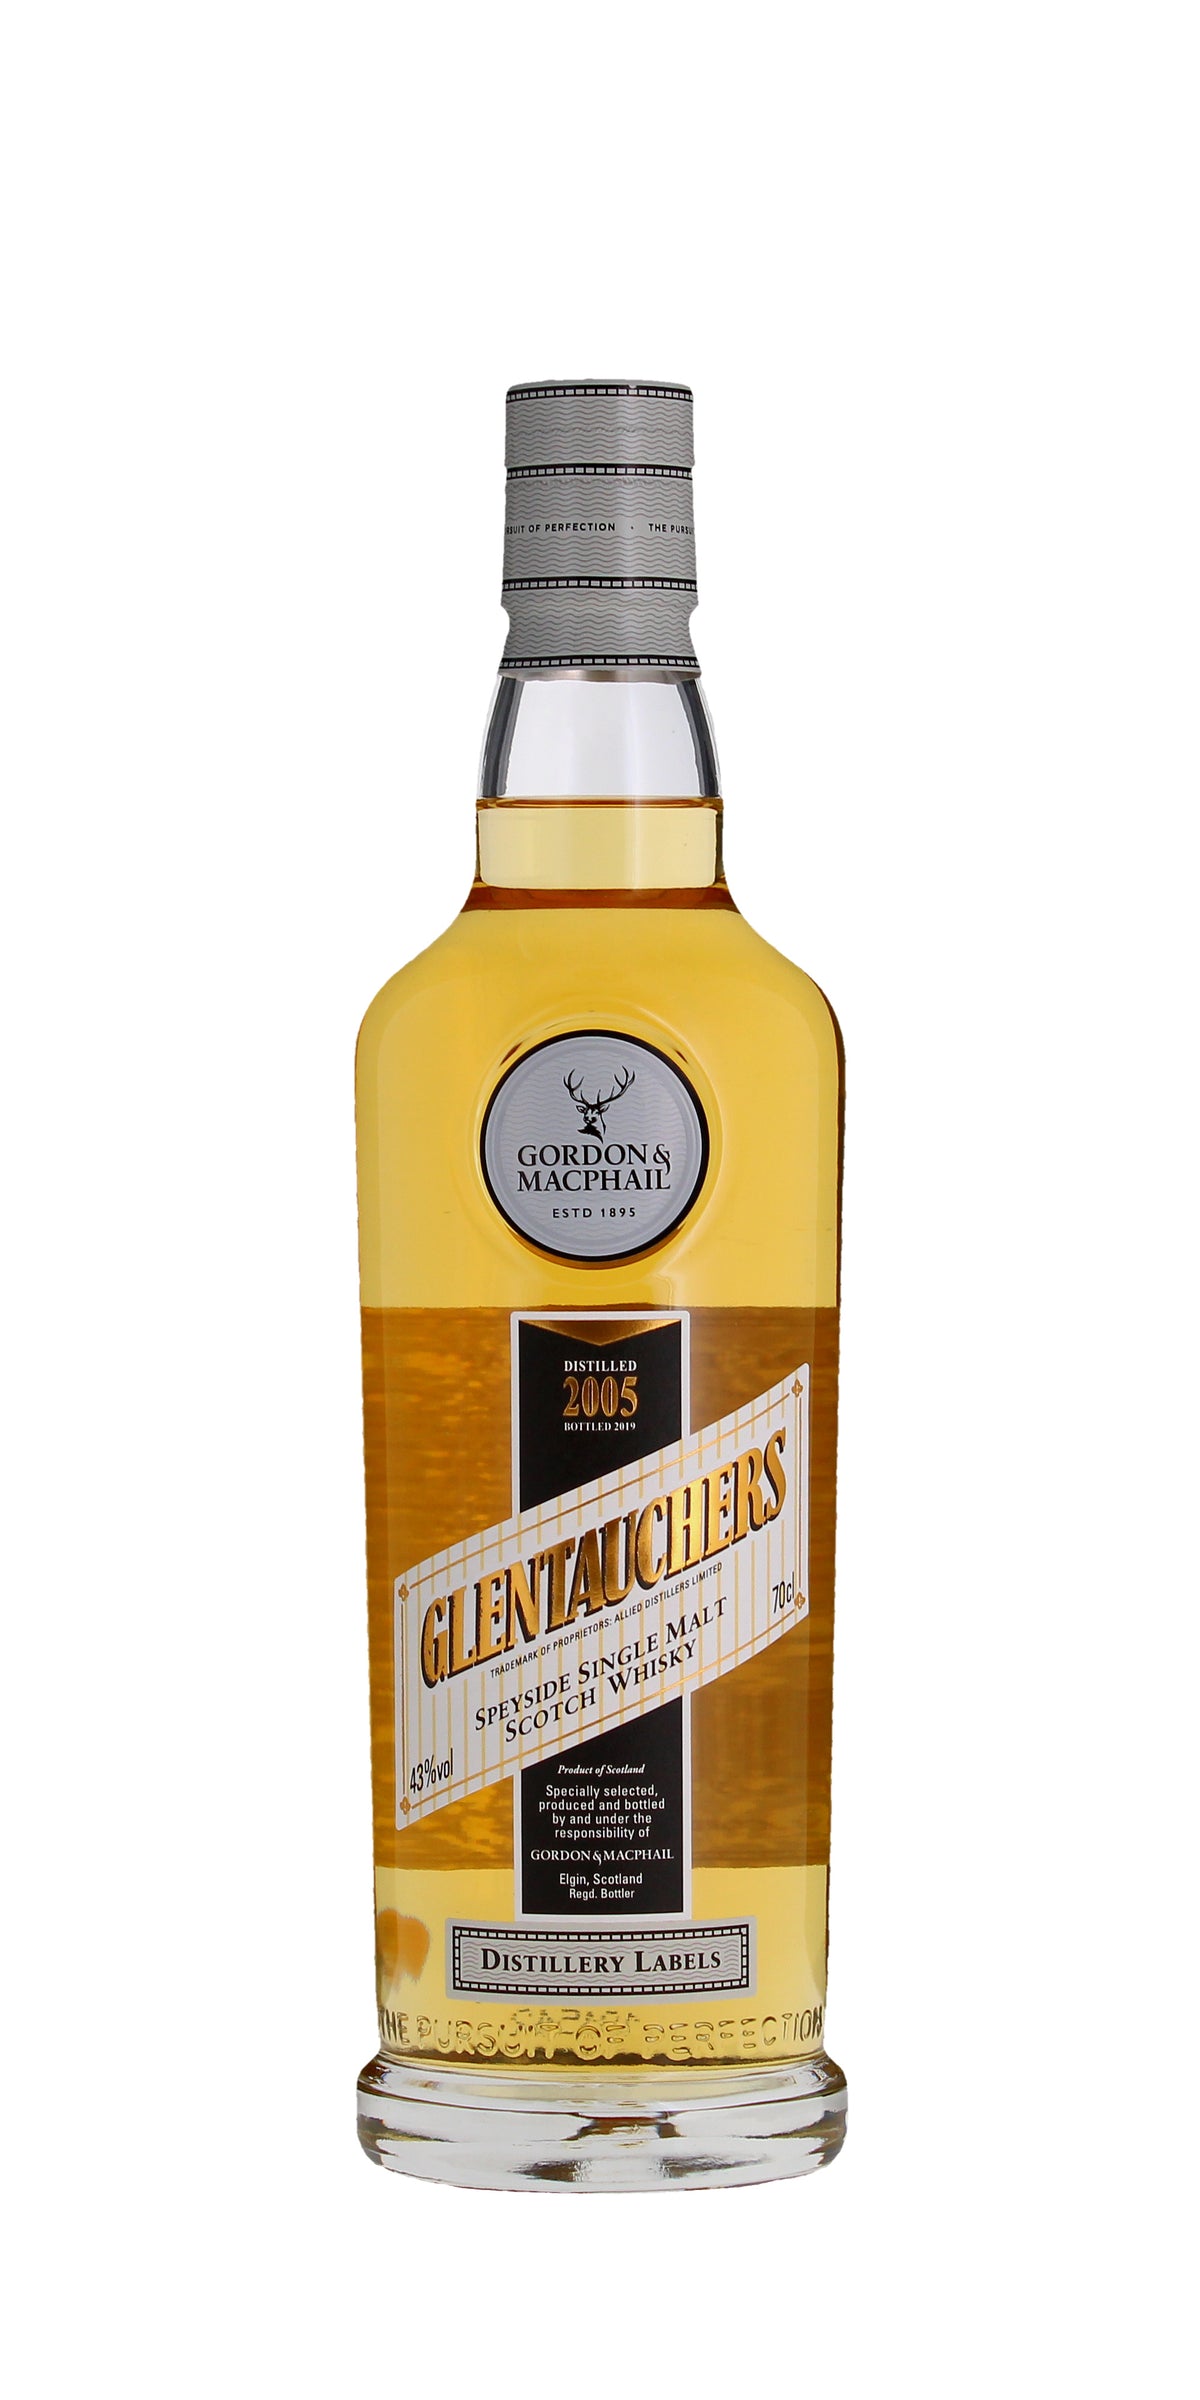 Gordon & McPhail Distillery Label, Glentauchers 2008, Speyside Single Malt